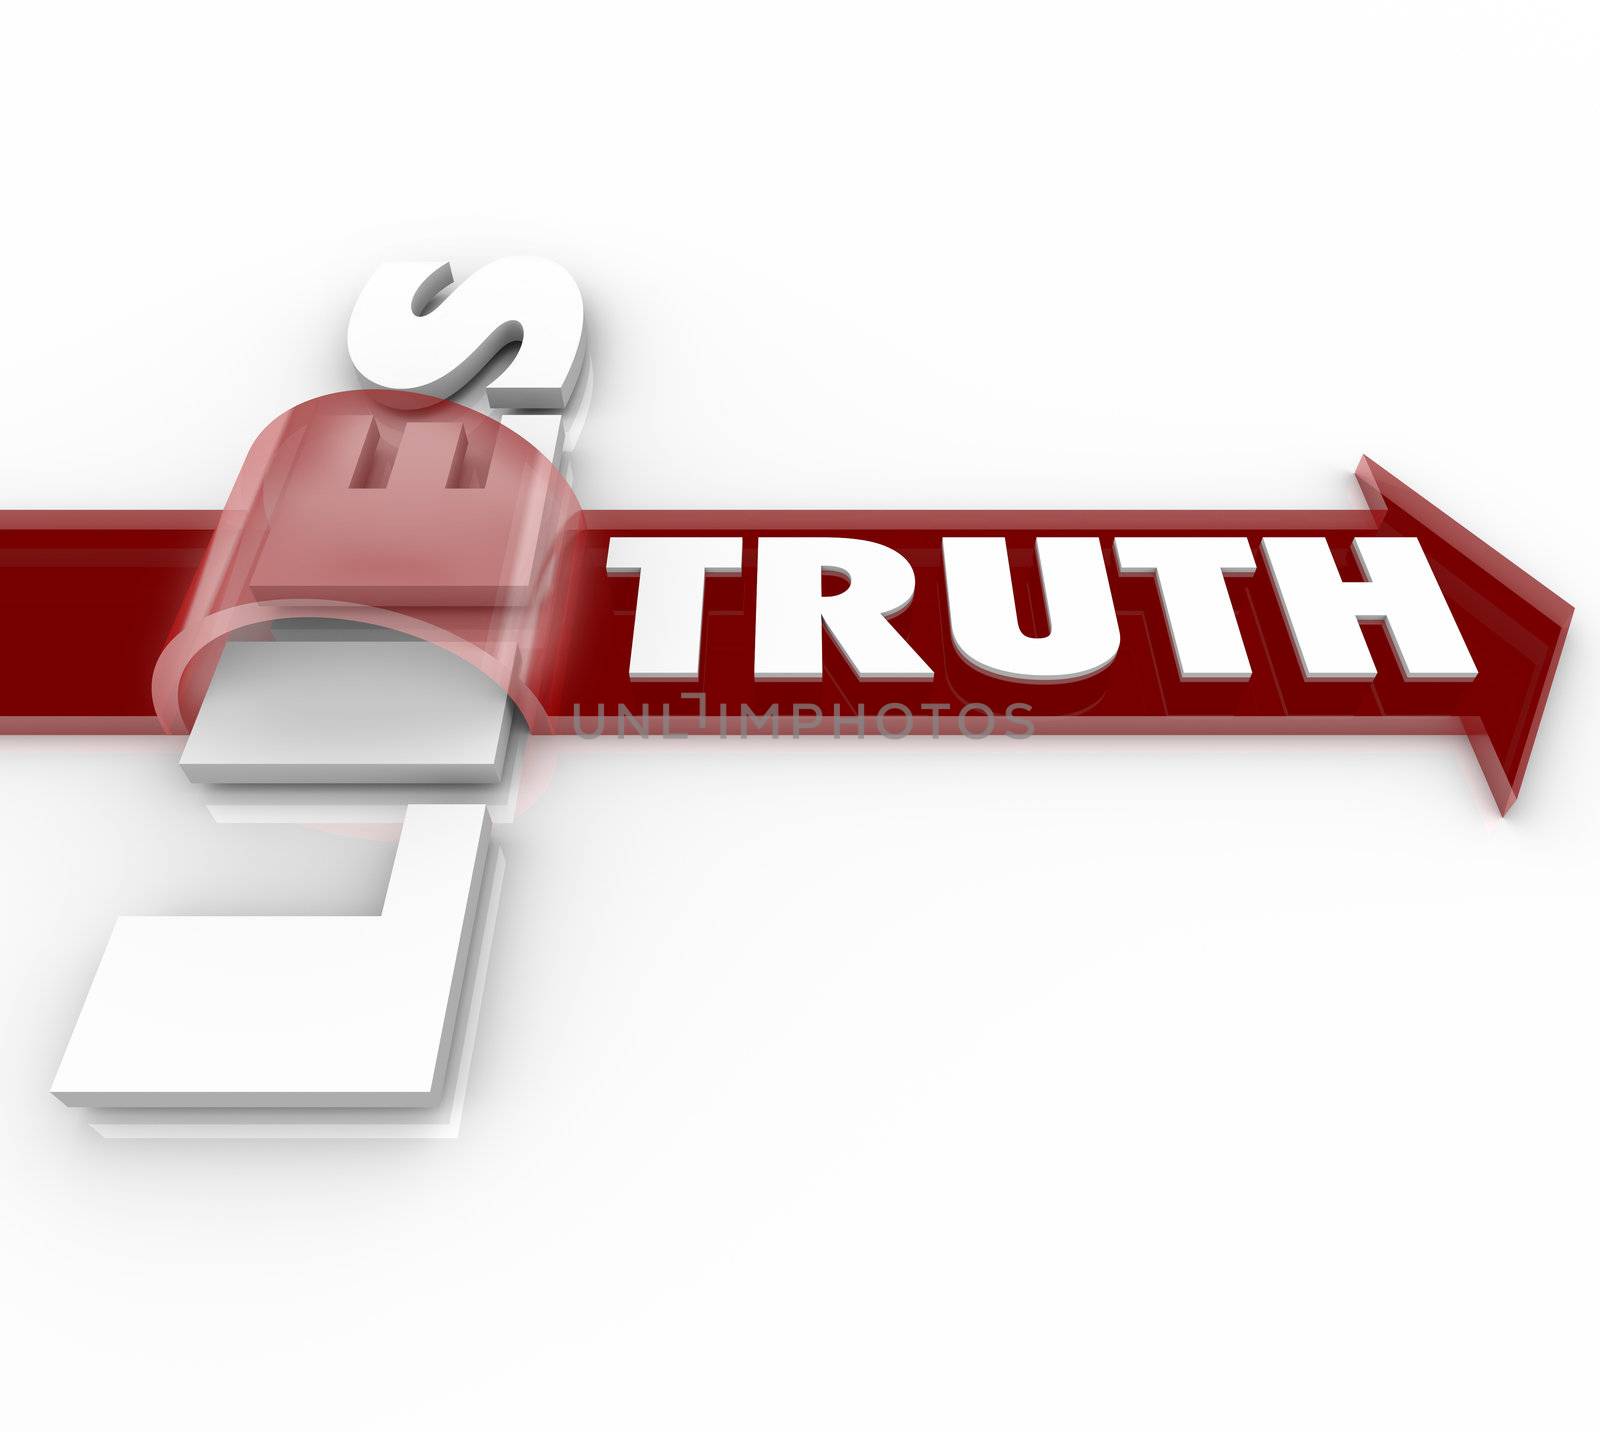 Truth Beats Lies Arrow Over Word Honesty vs Dishonesty by iQoncept